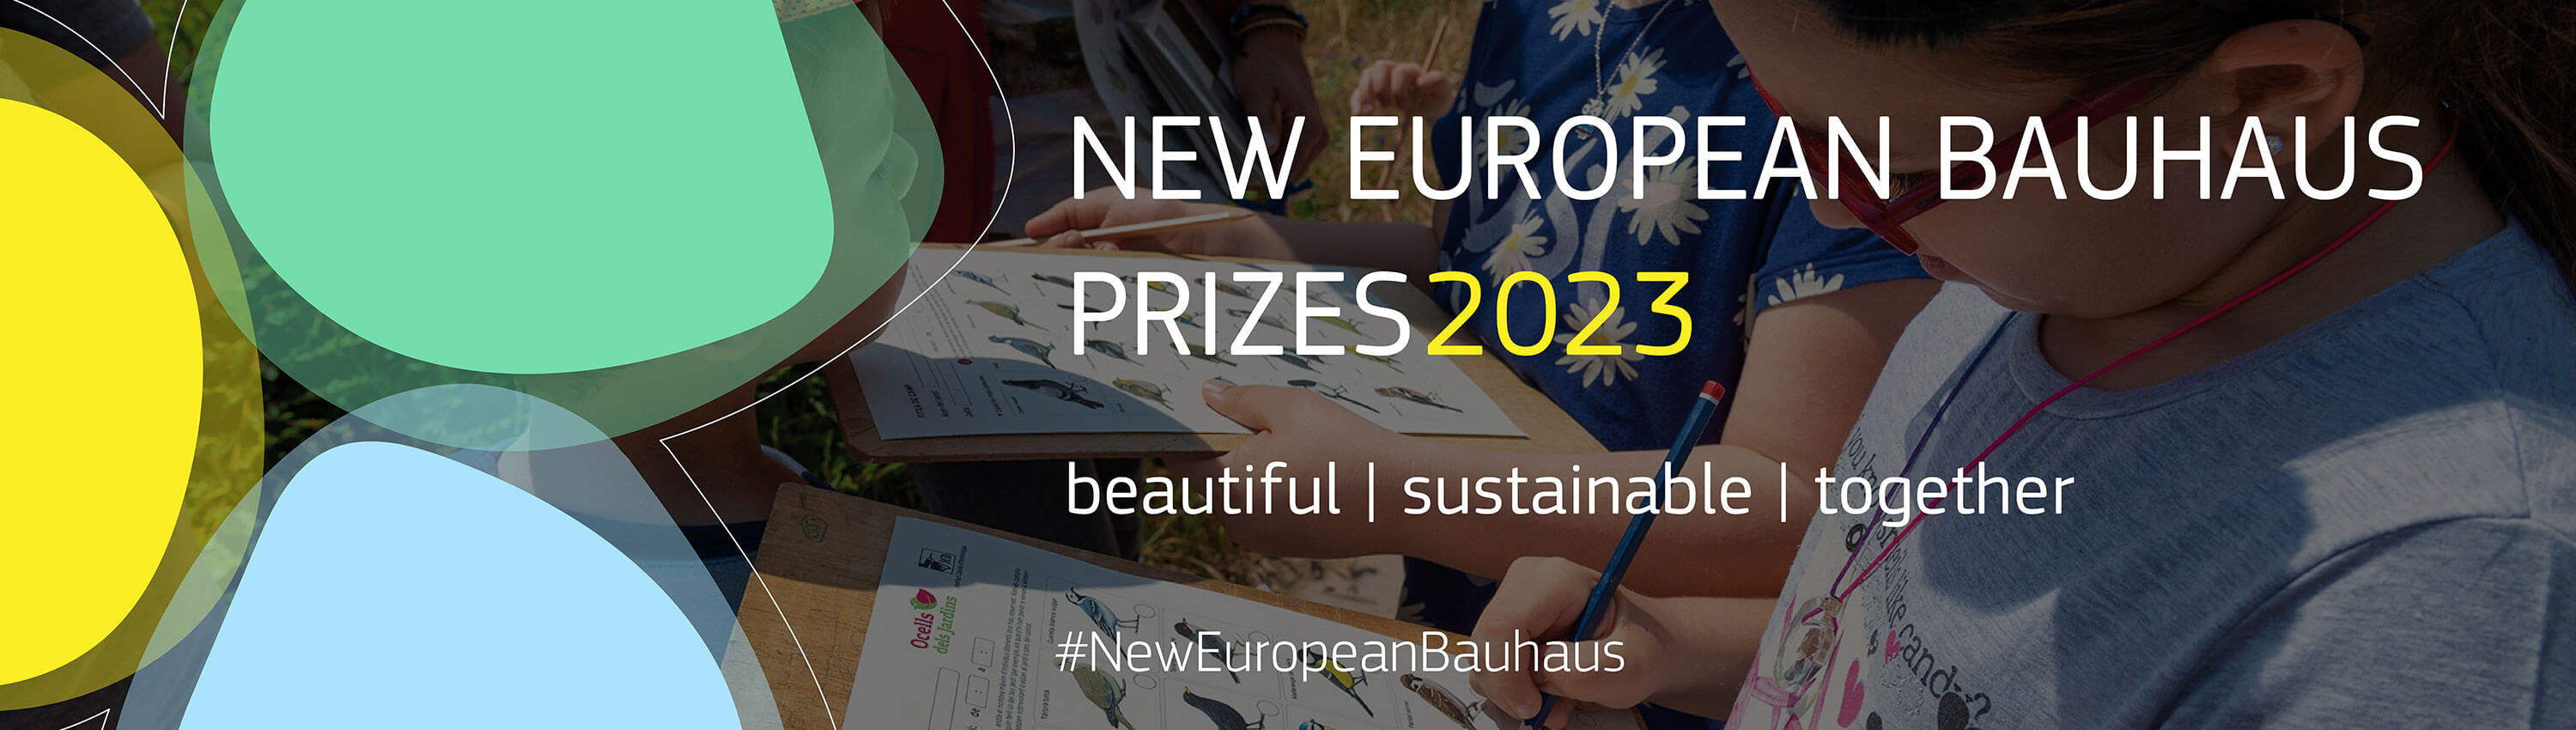 Premios NOVO BAUHAUS EUROPEU 2023